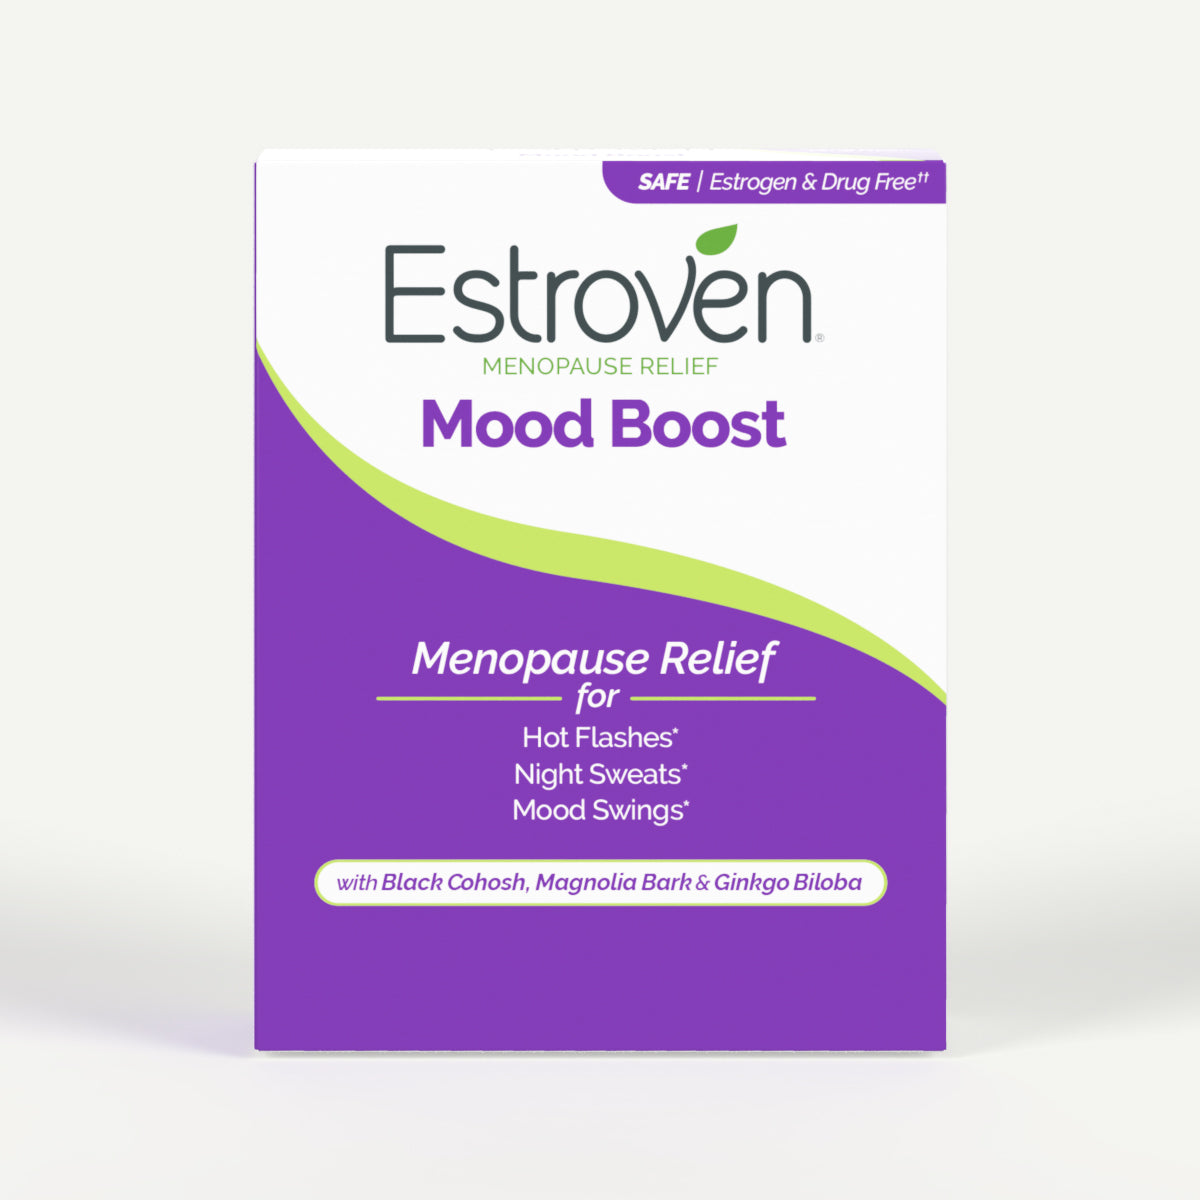 Estroven Menopause Relief With Mood Boost